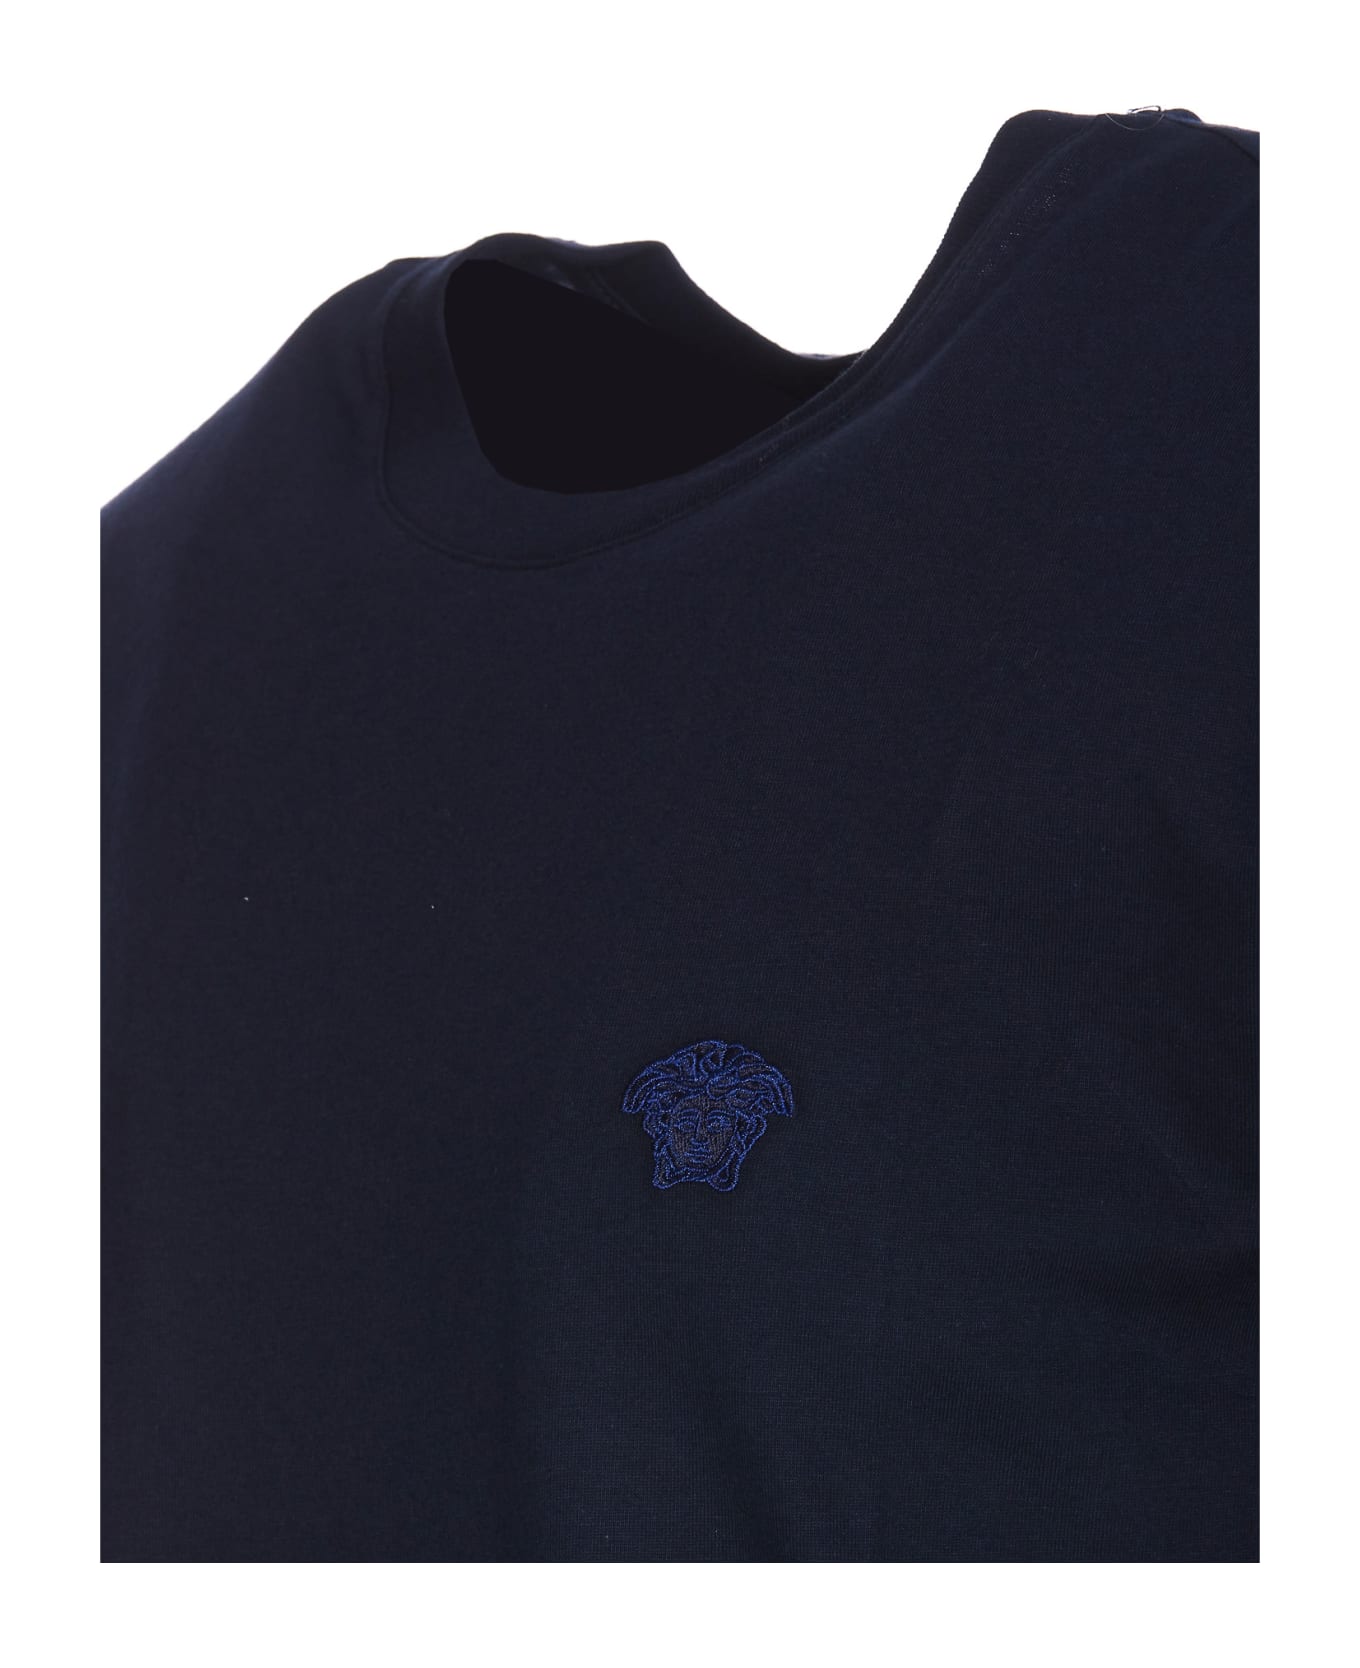 Versace Medusa Logo T-shirt - Blue シャツ